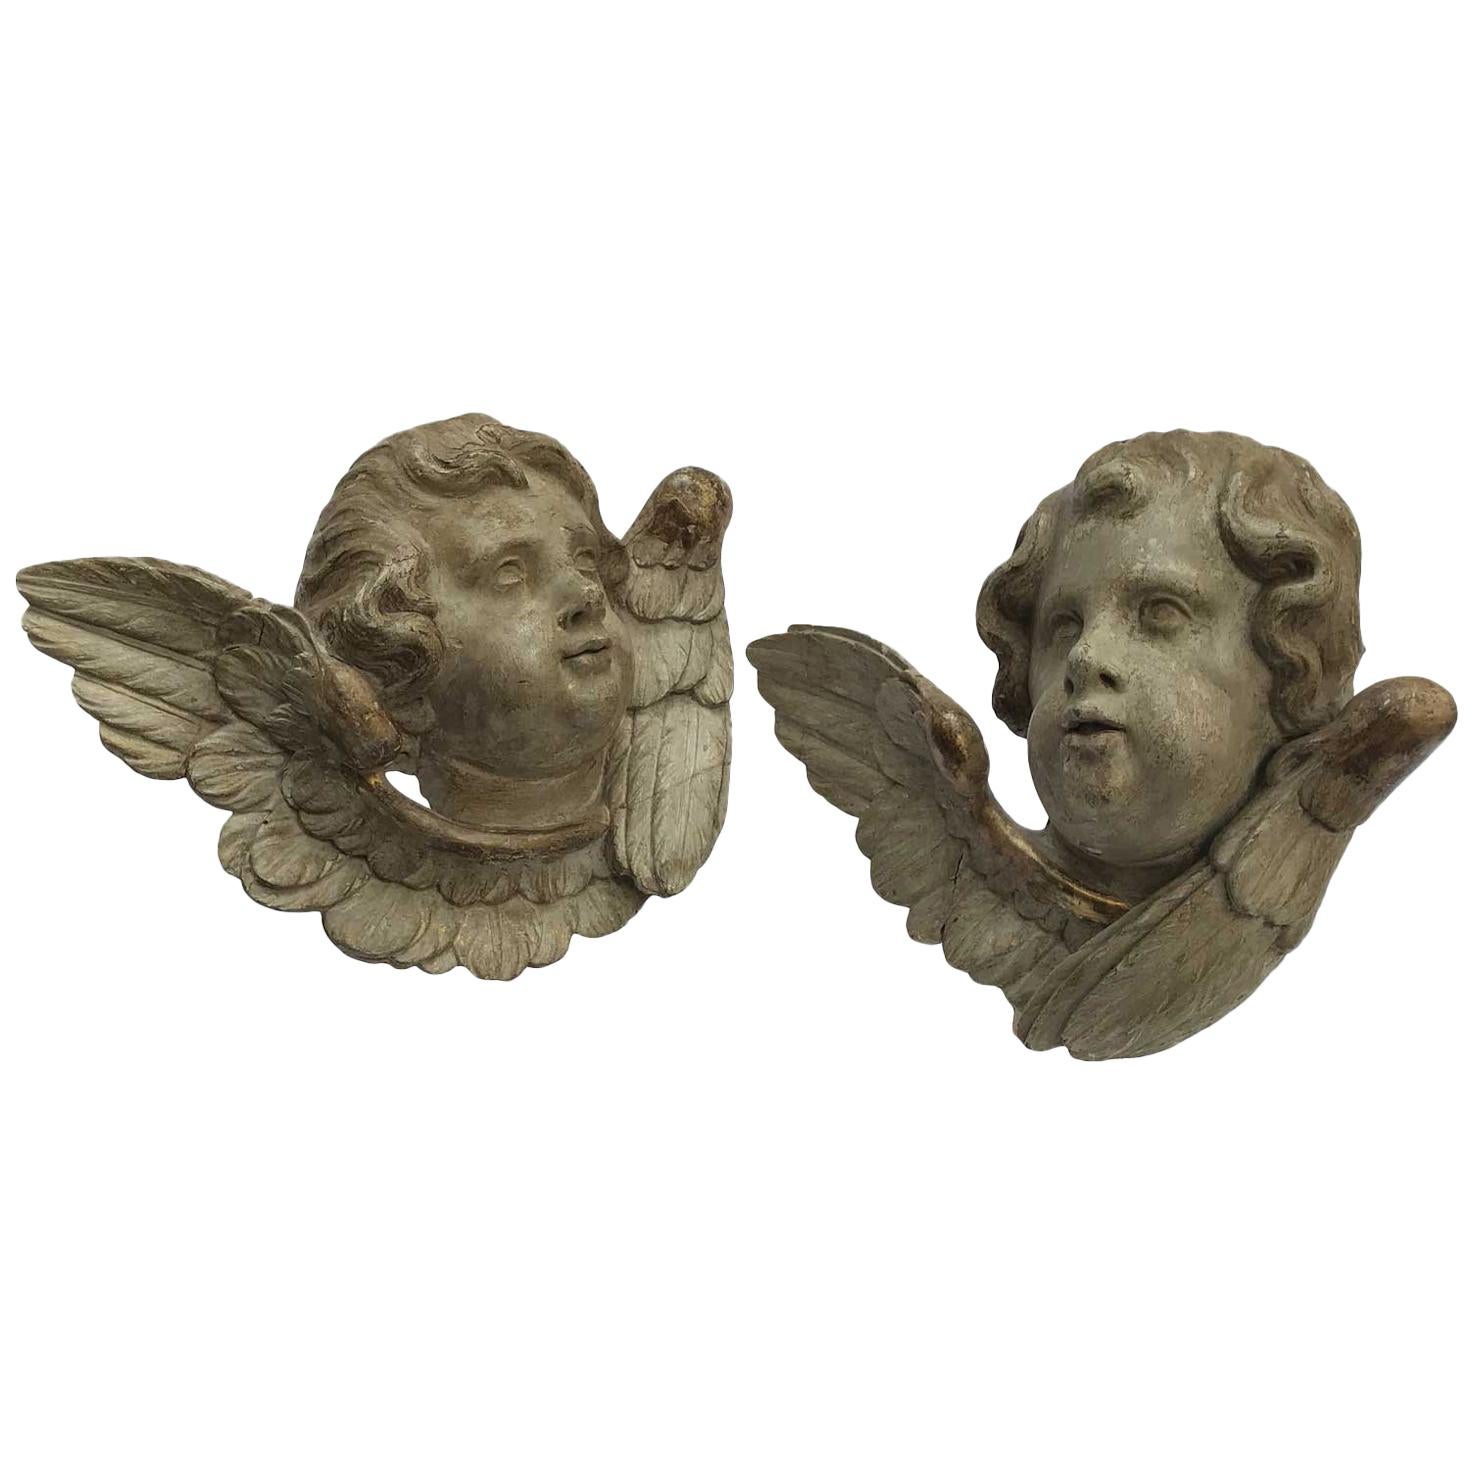 Pair of Italian Cherub Head Sculptures 18th Century Carved Winged Putti Heads